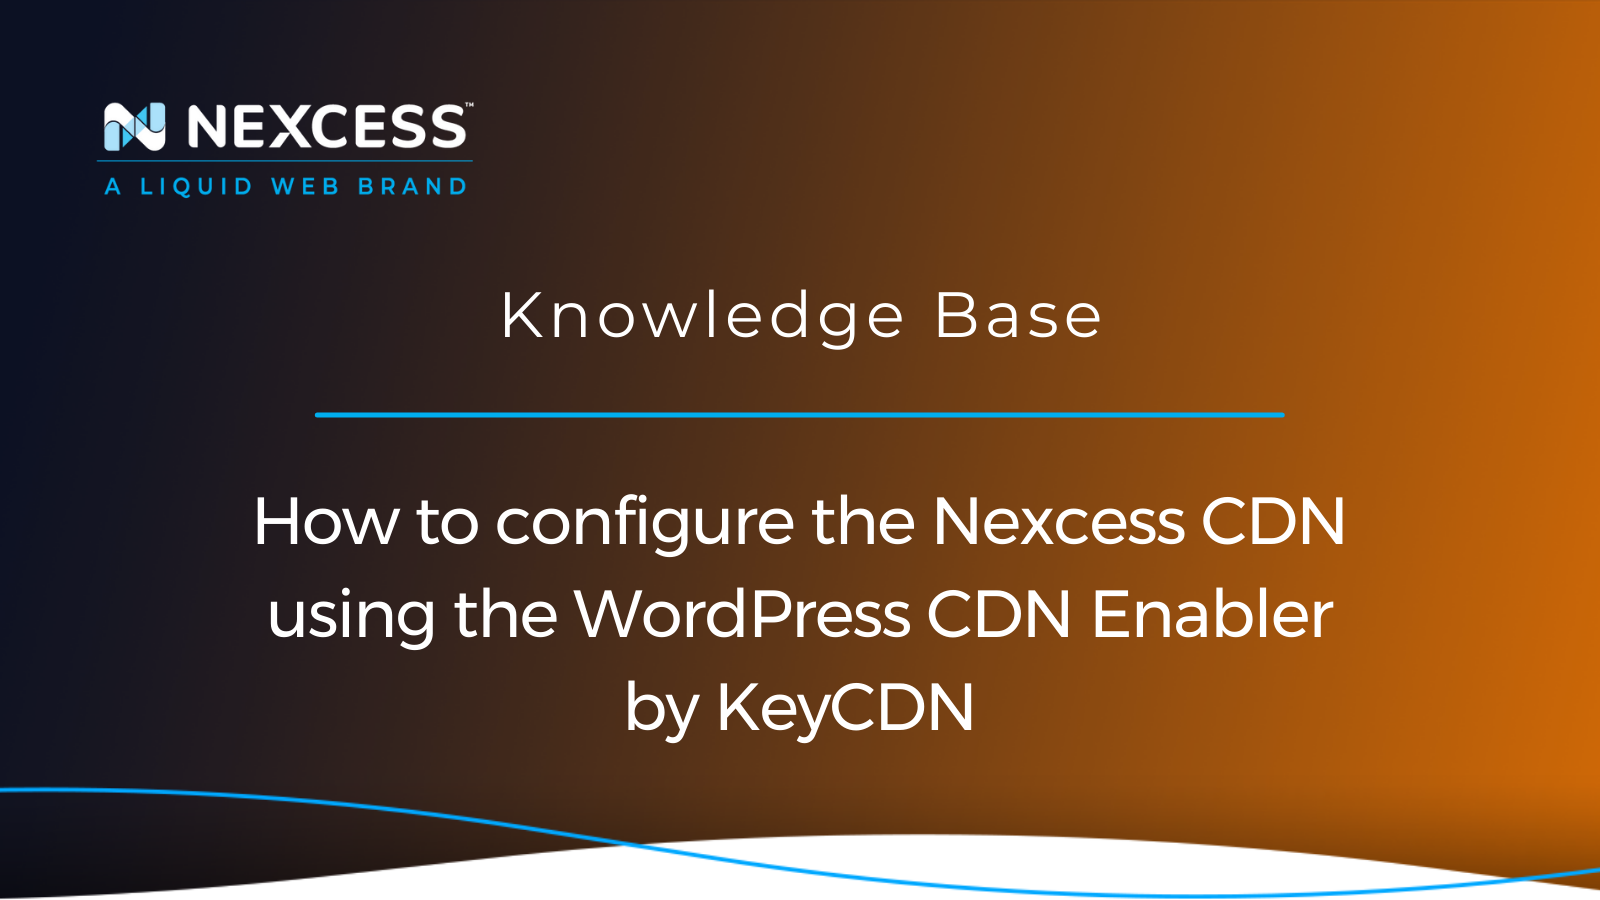 How to configure the Nexcess CDN using the WordPress CDN Enabler by KeyCDN